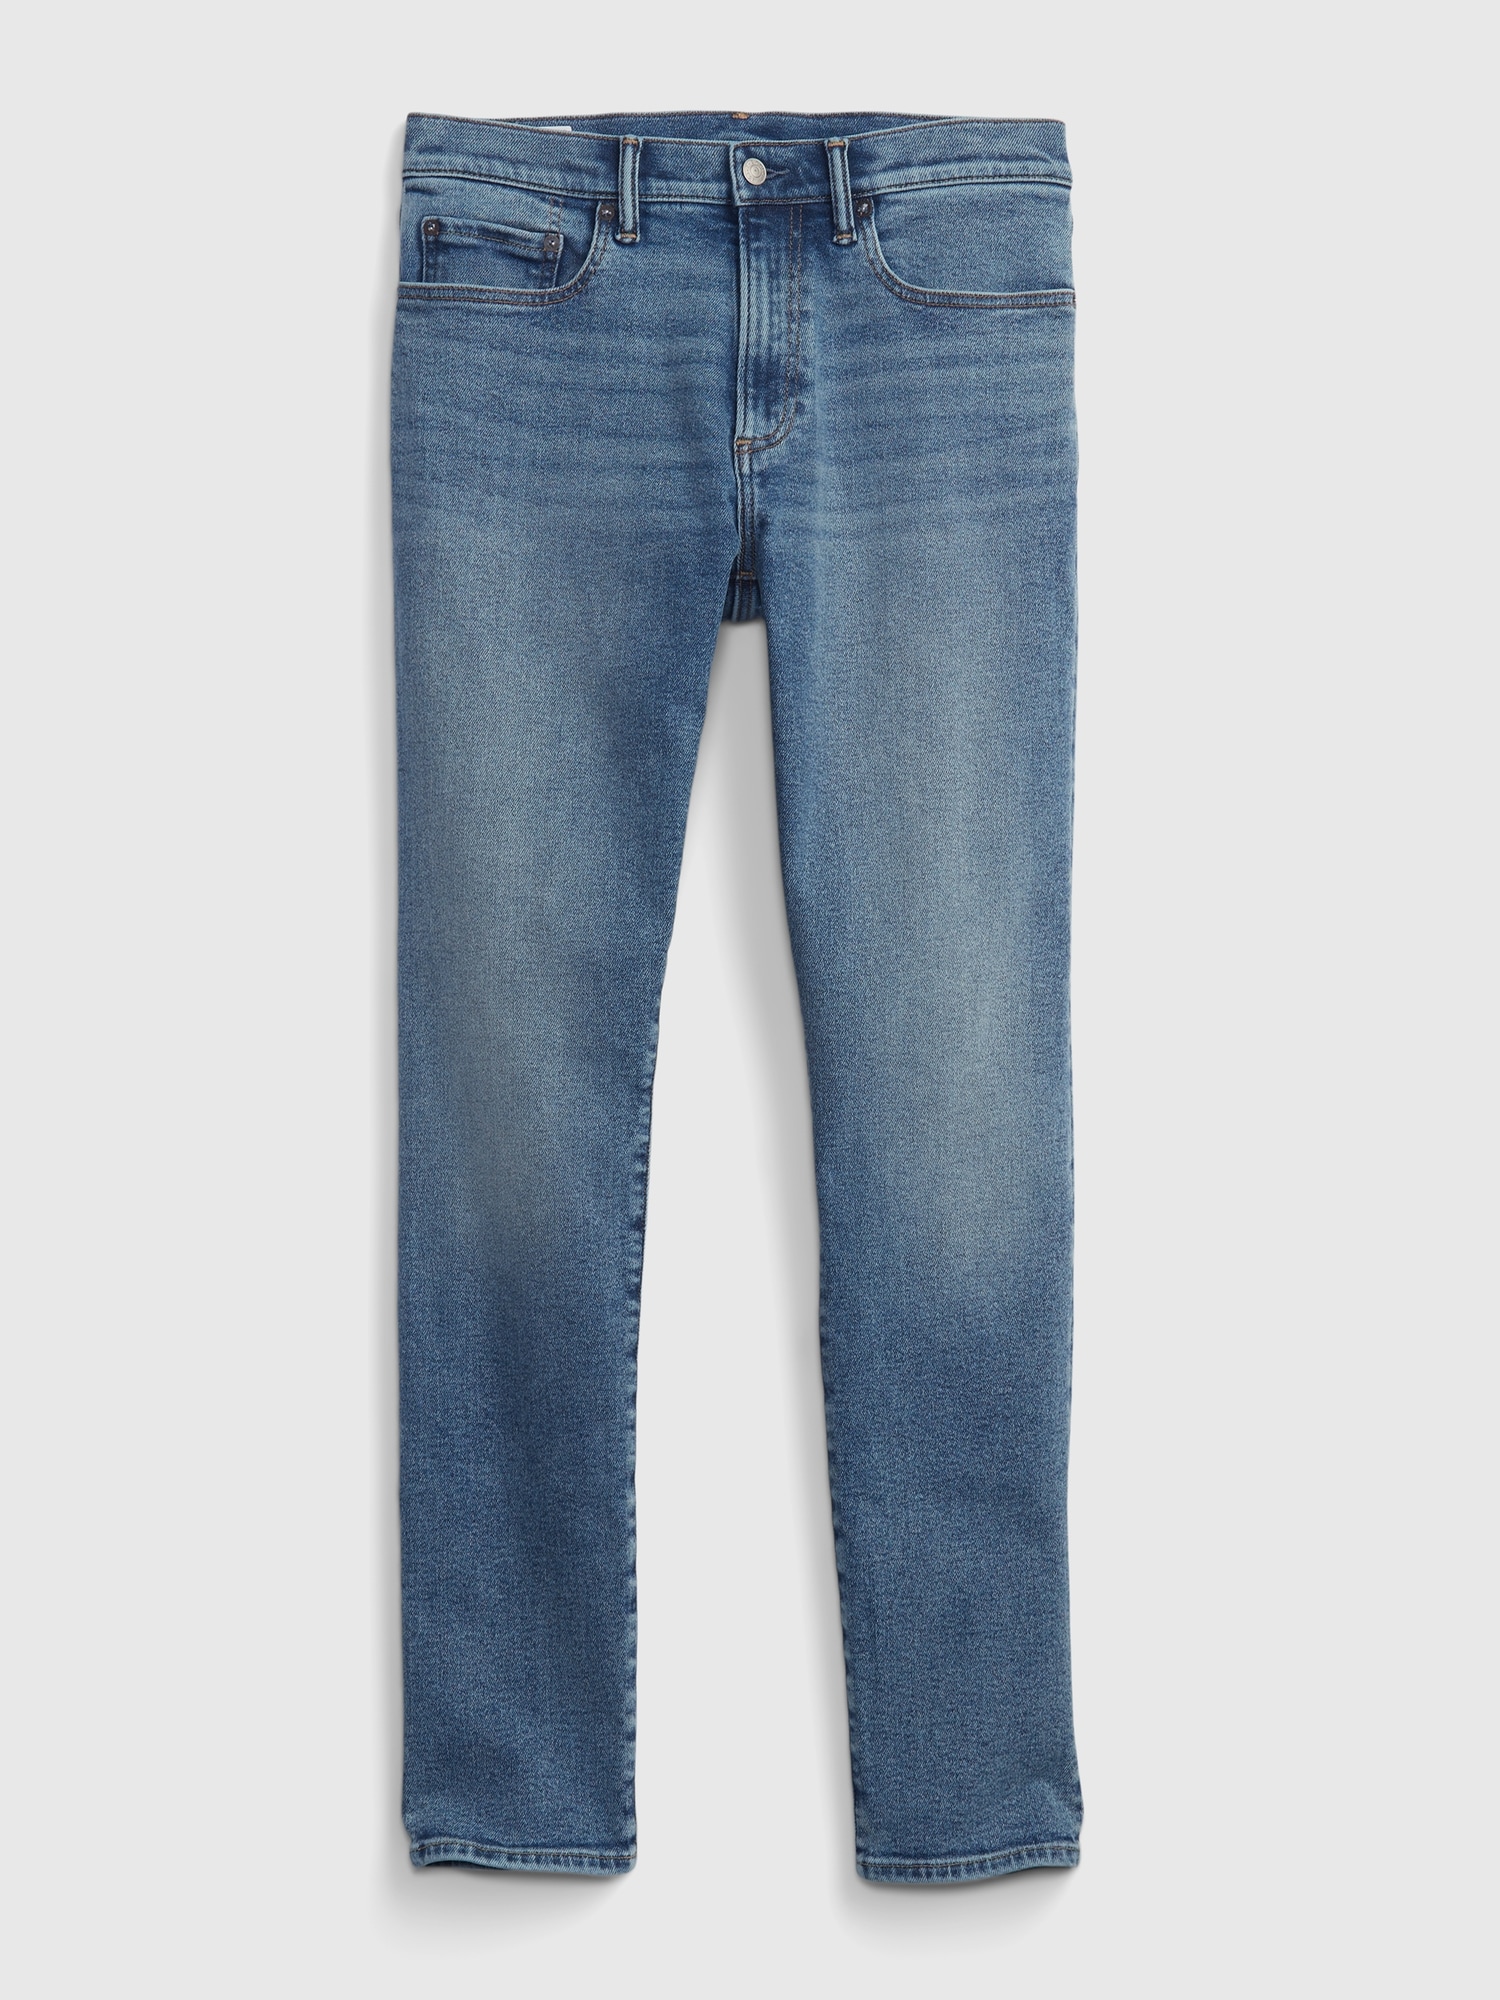 GAP Cone Denim Men's Distressed Jeans in Slim Fit with GapFlex NEW 32x30